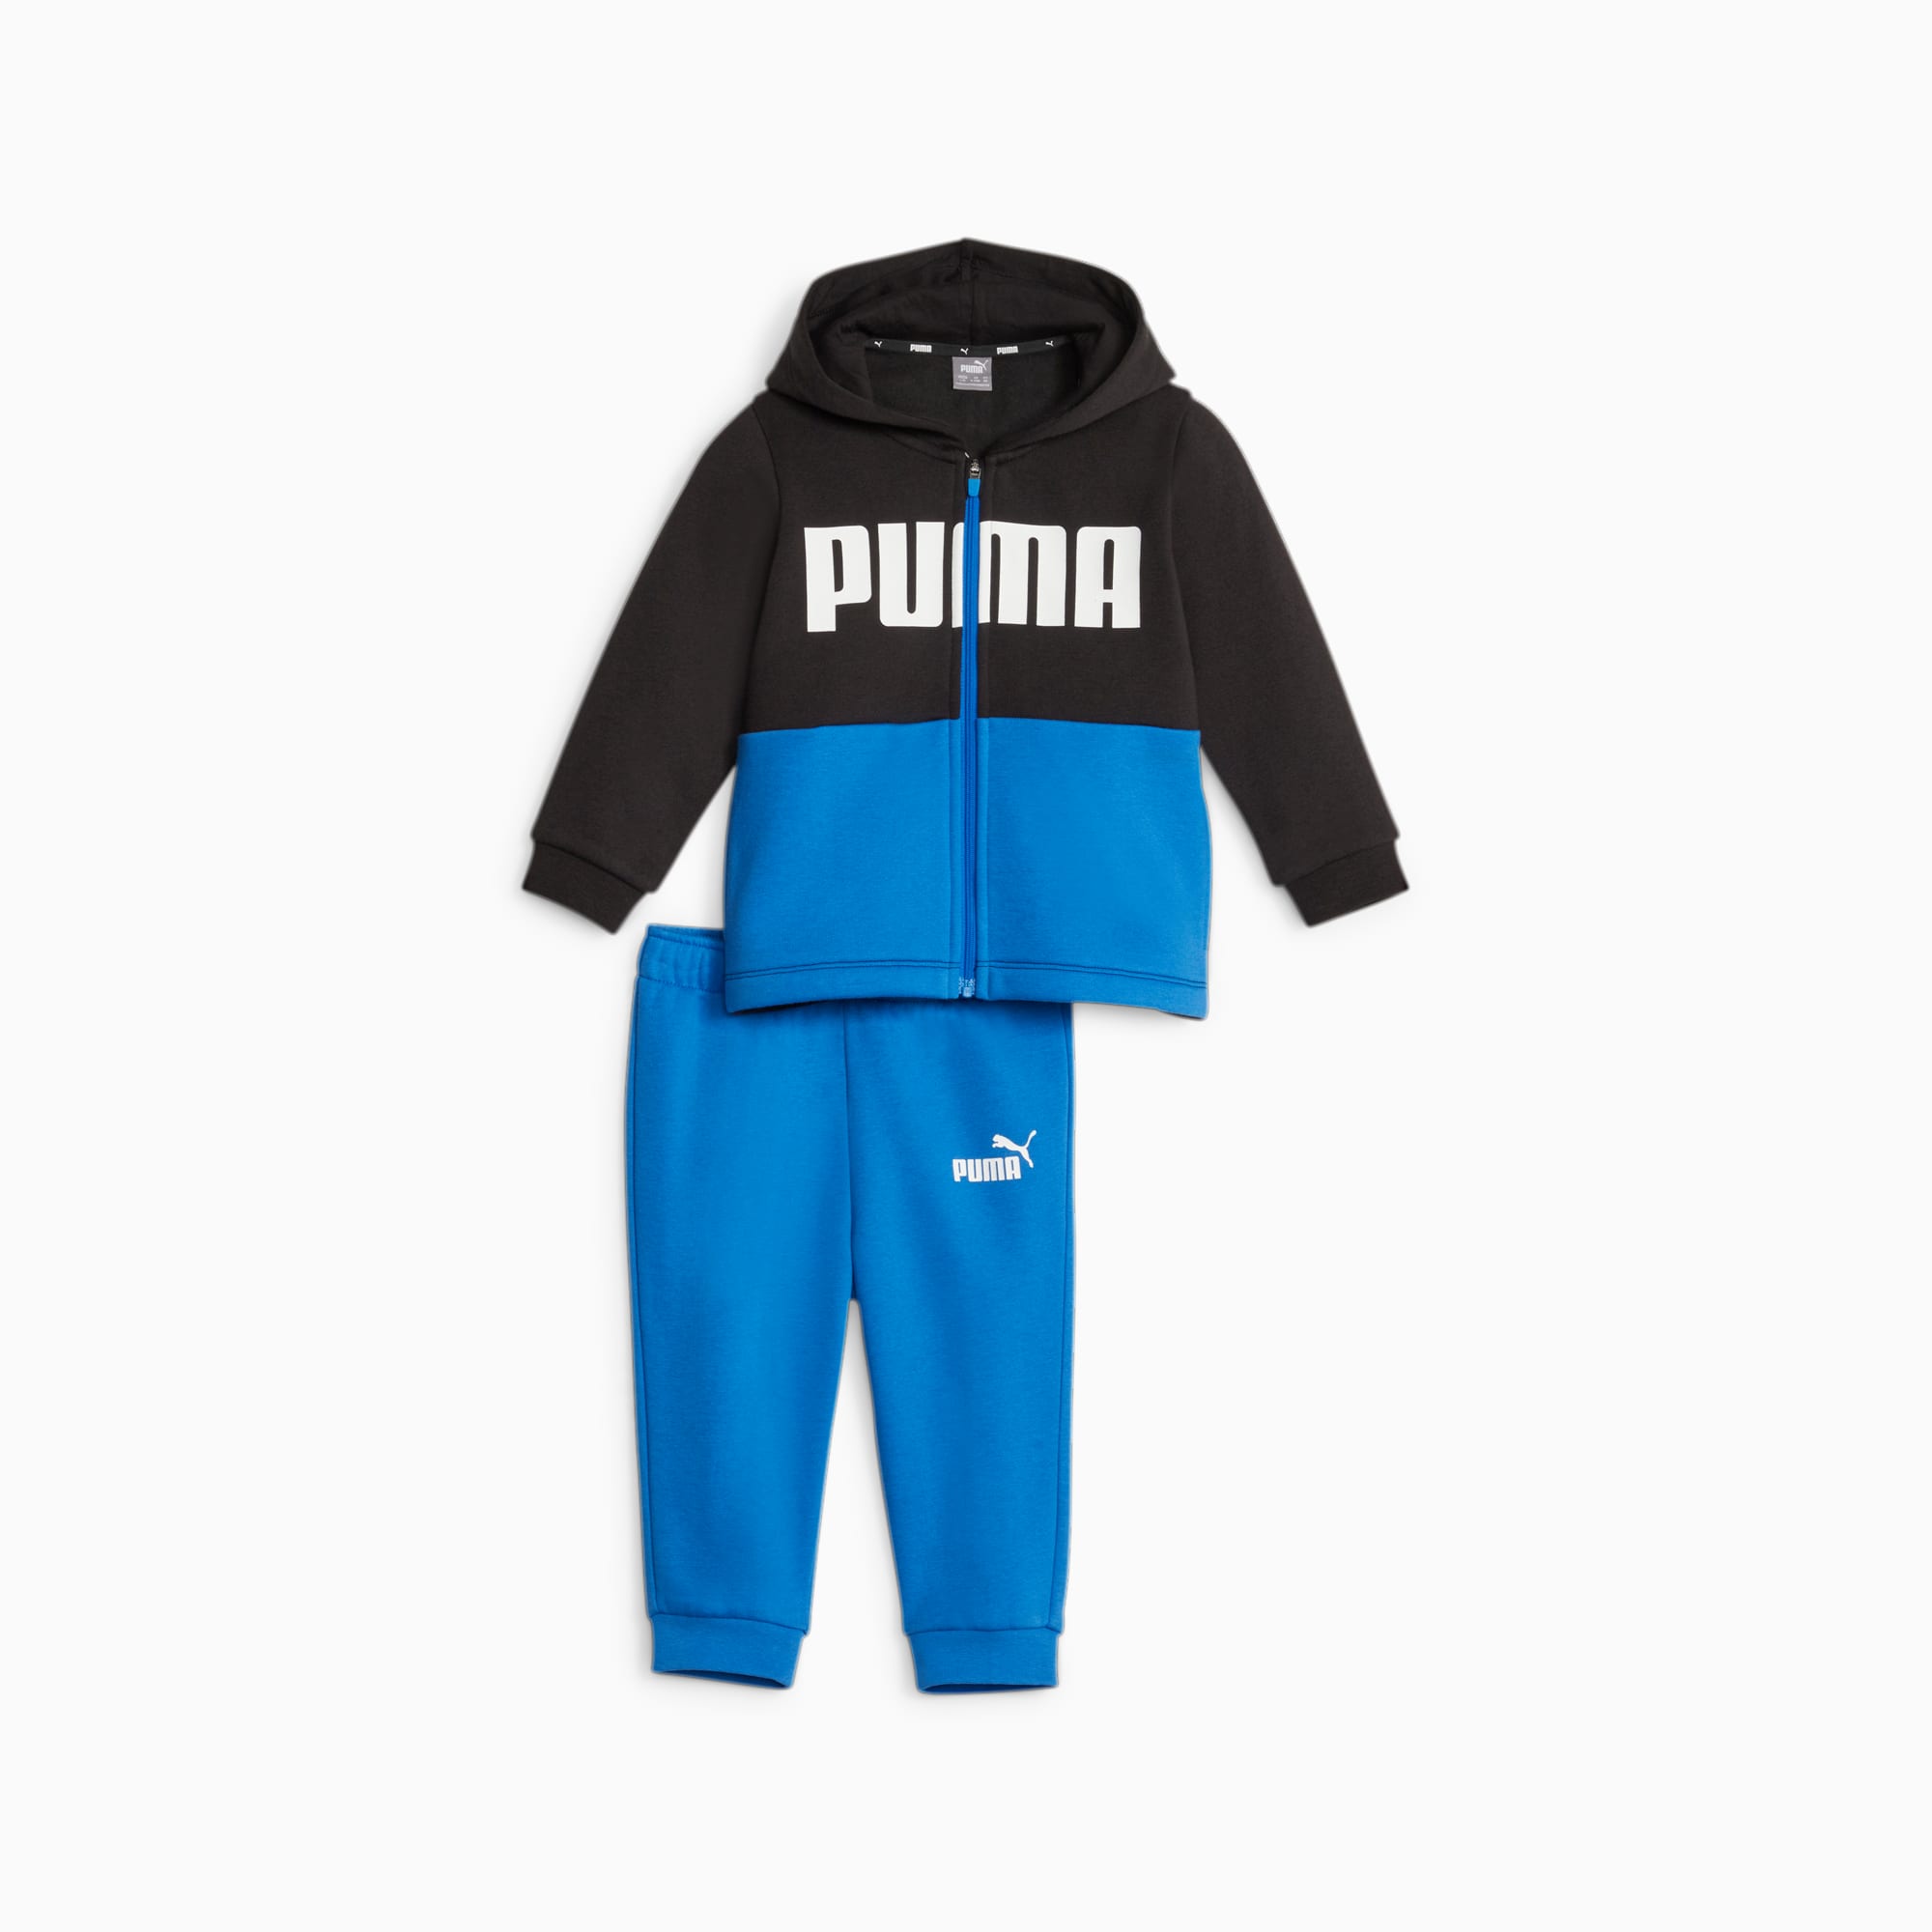 PUMA Minicats Colourblock Jogginganzug Baby Für Kinder, Blau, Größe: 80, Kleidung